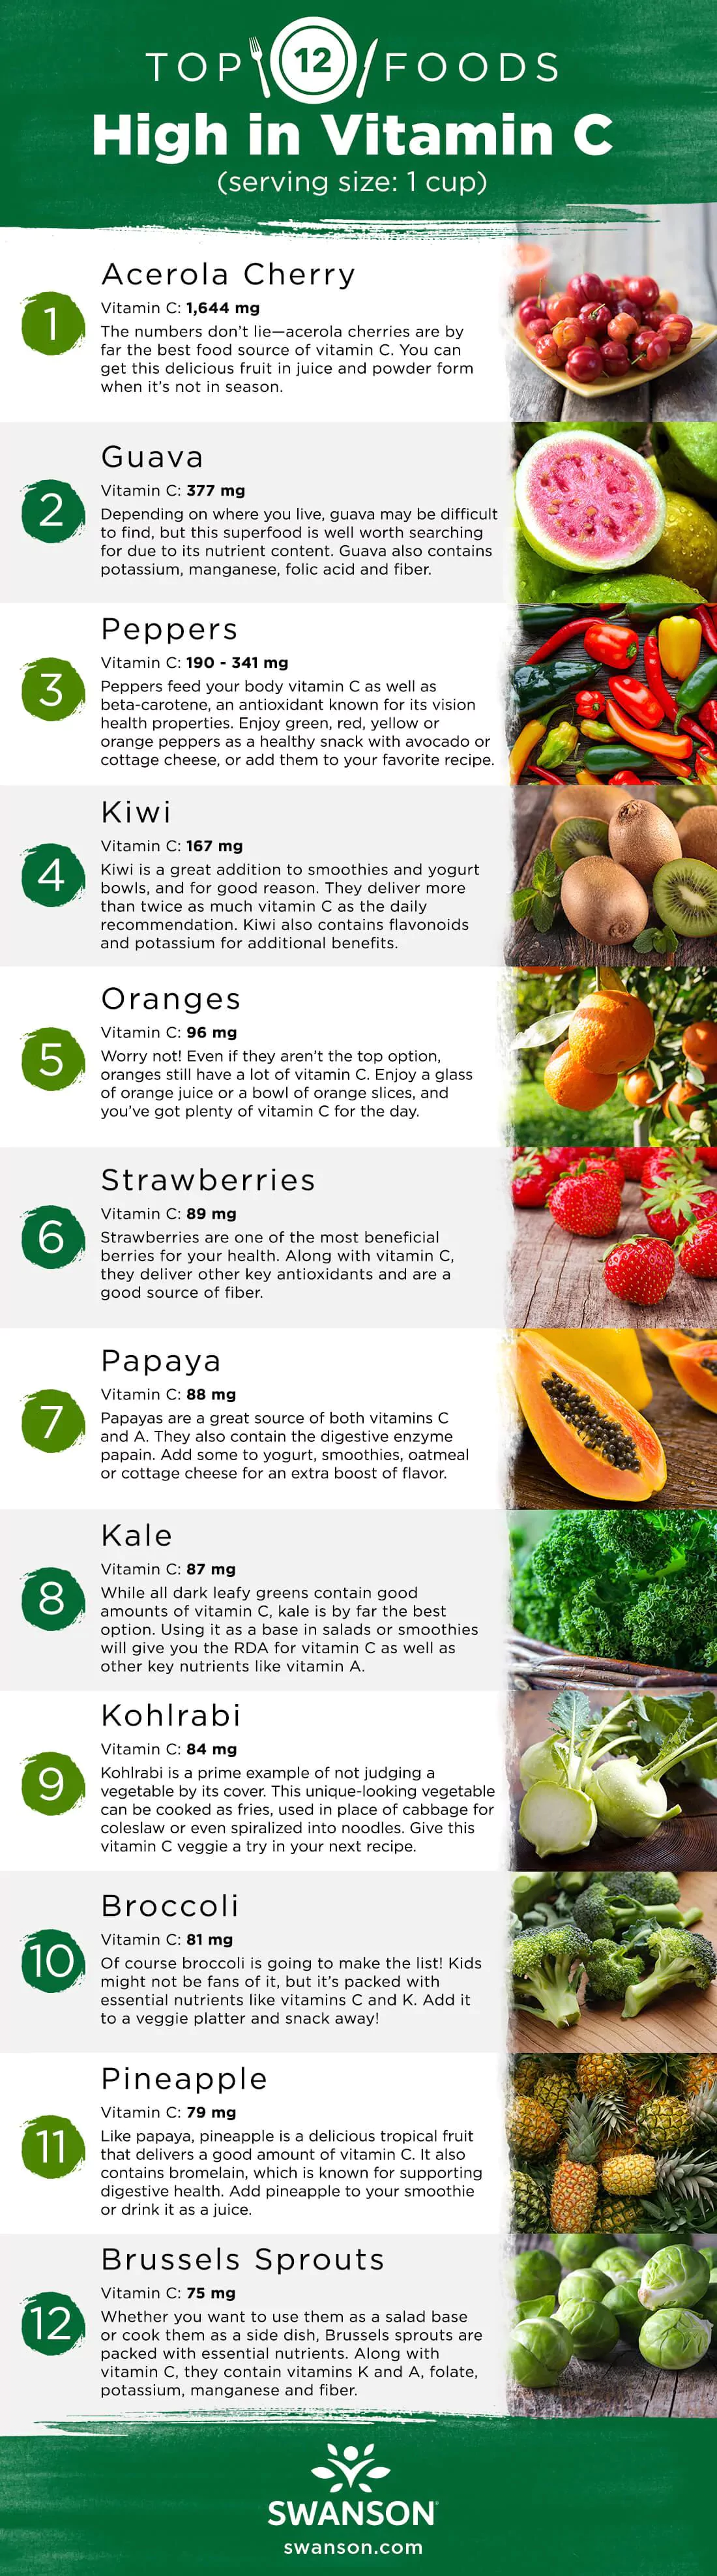 Top 12 Foods High in Vitamin C